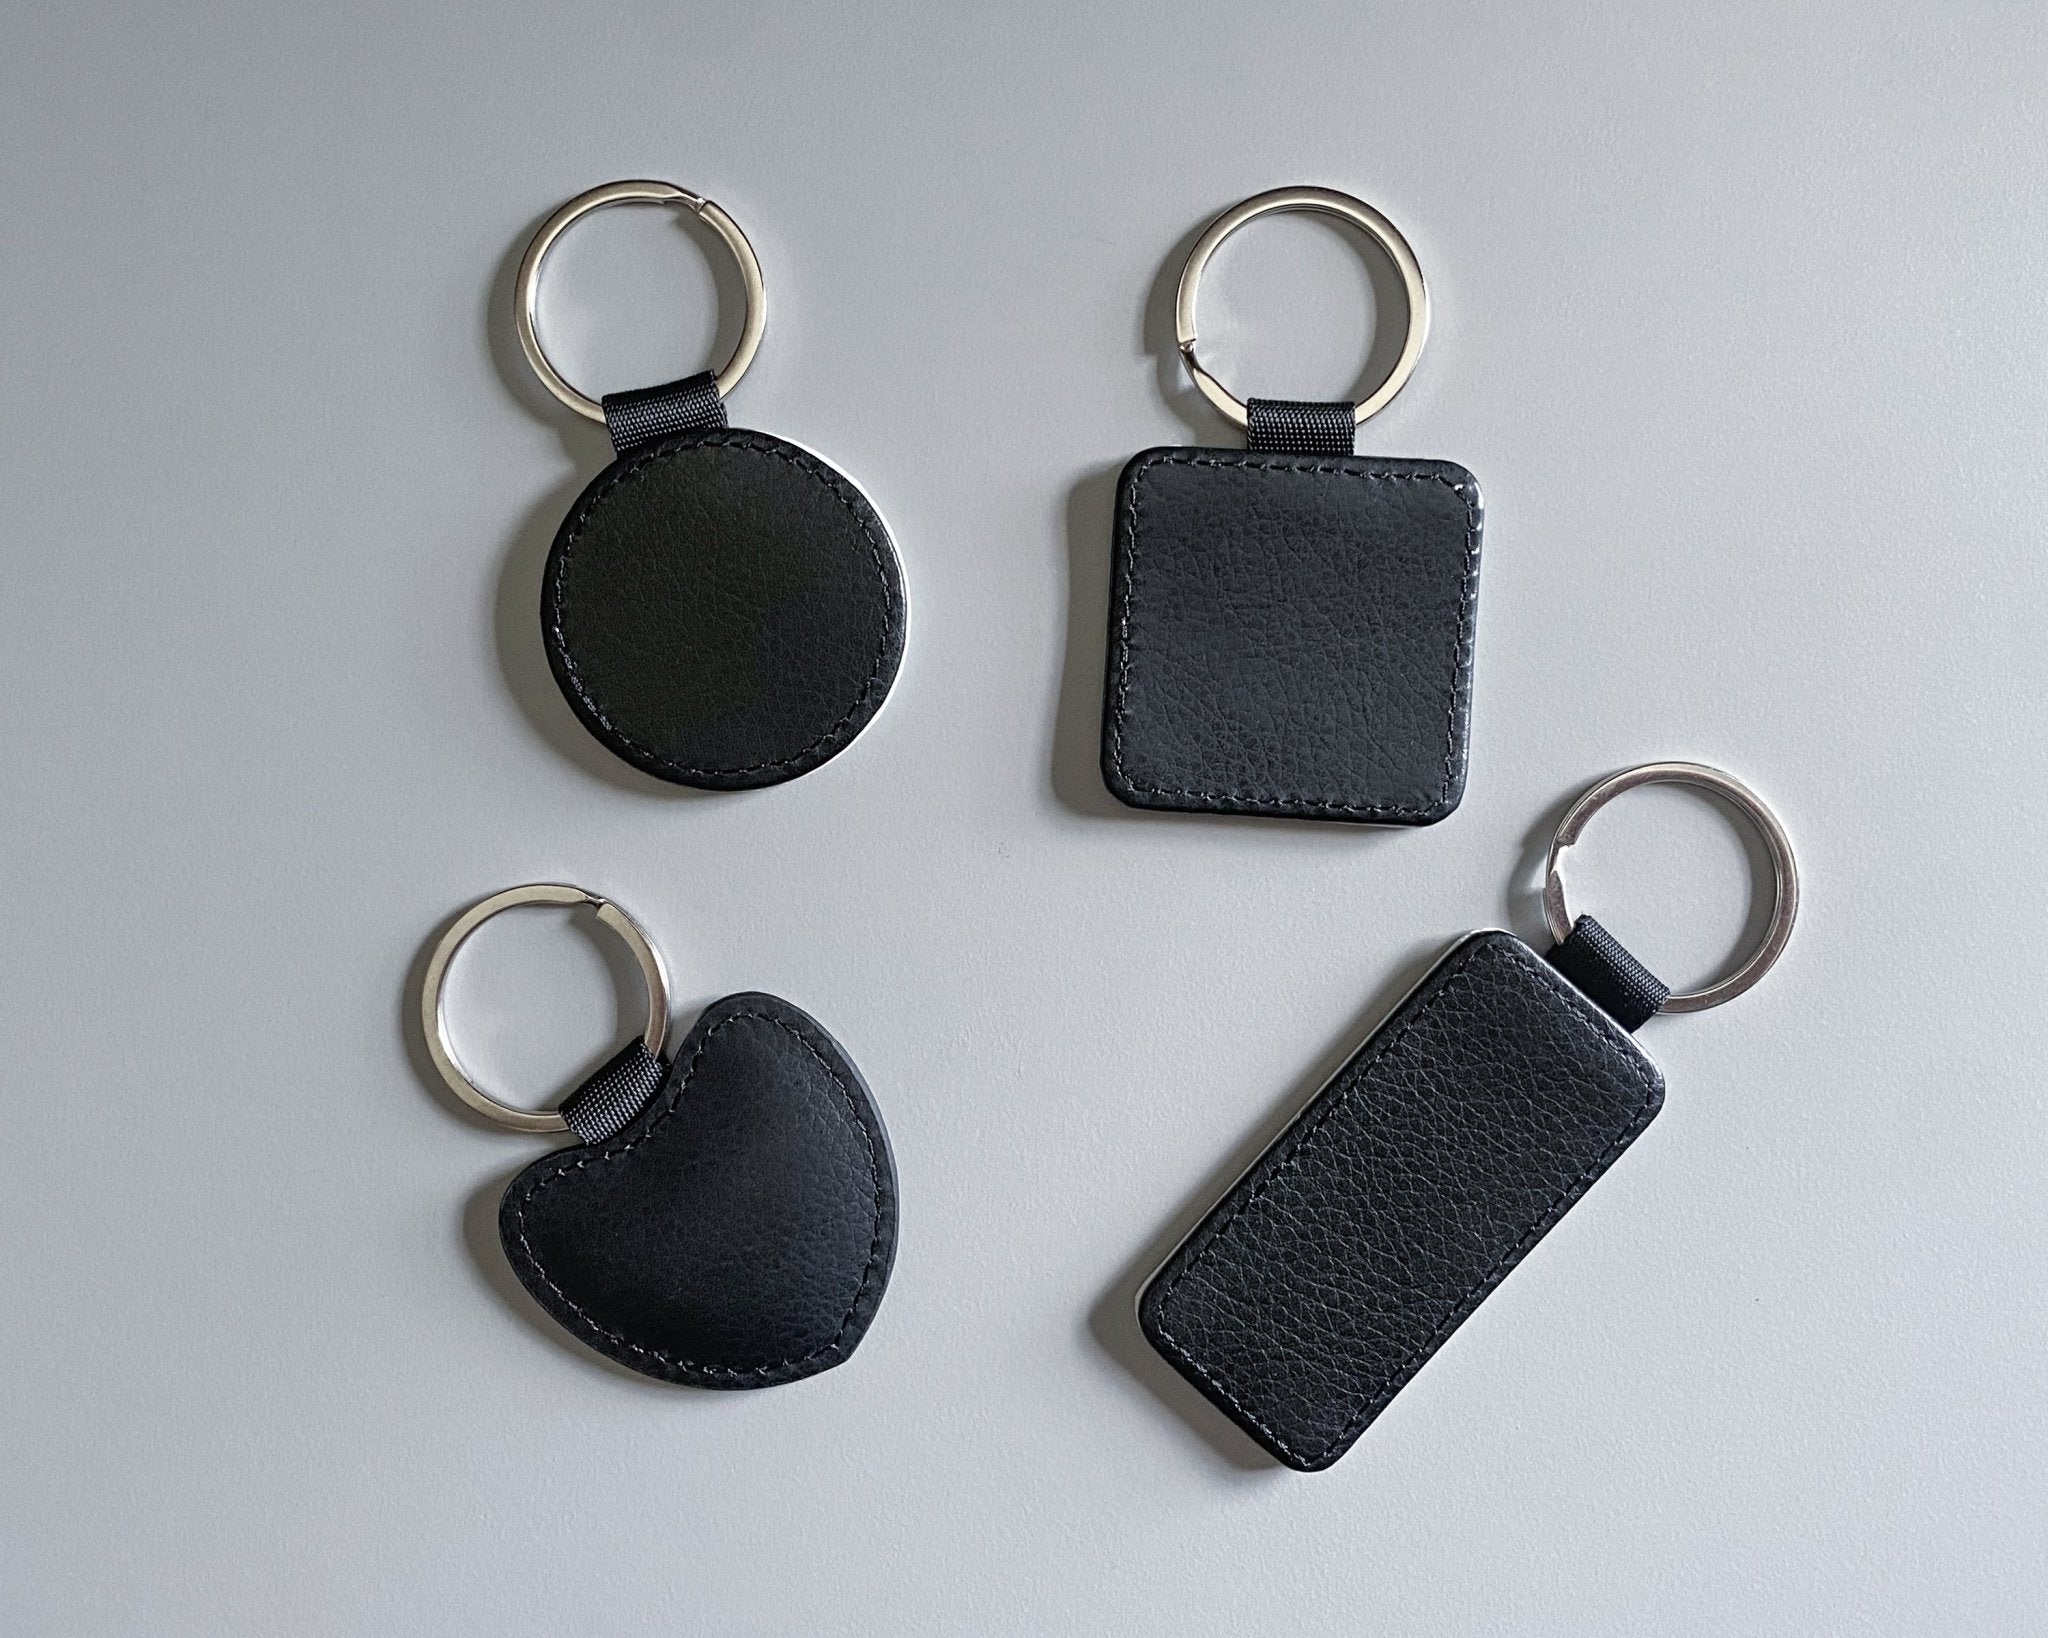 Kelly Custom Creations & Blanks PU Leather Keychains Circle